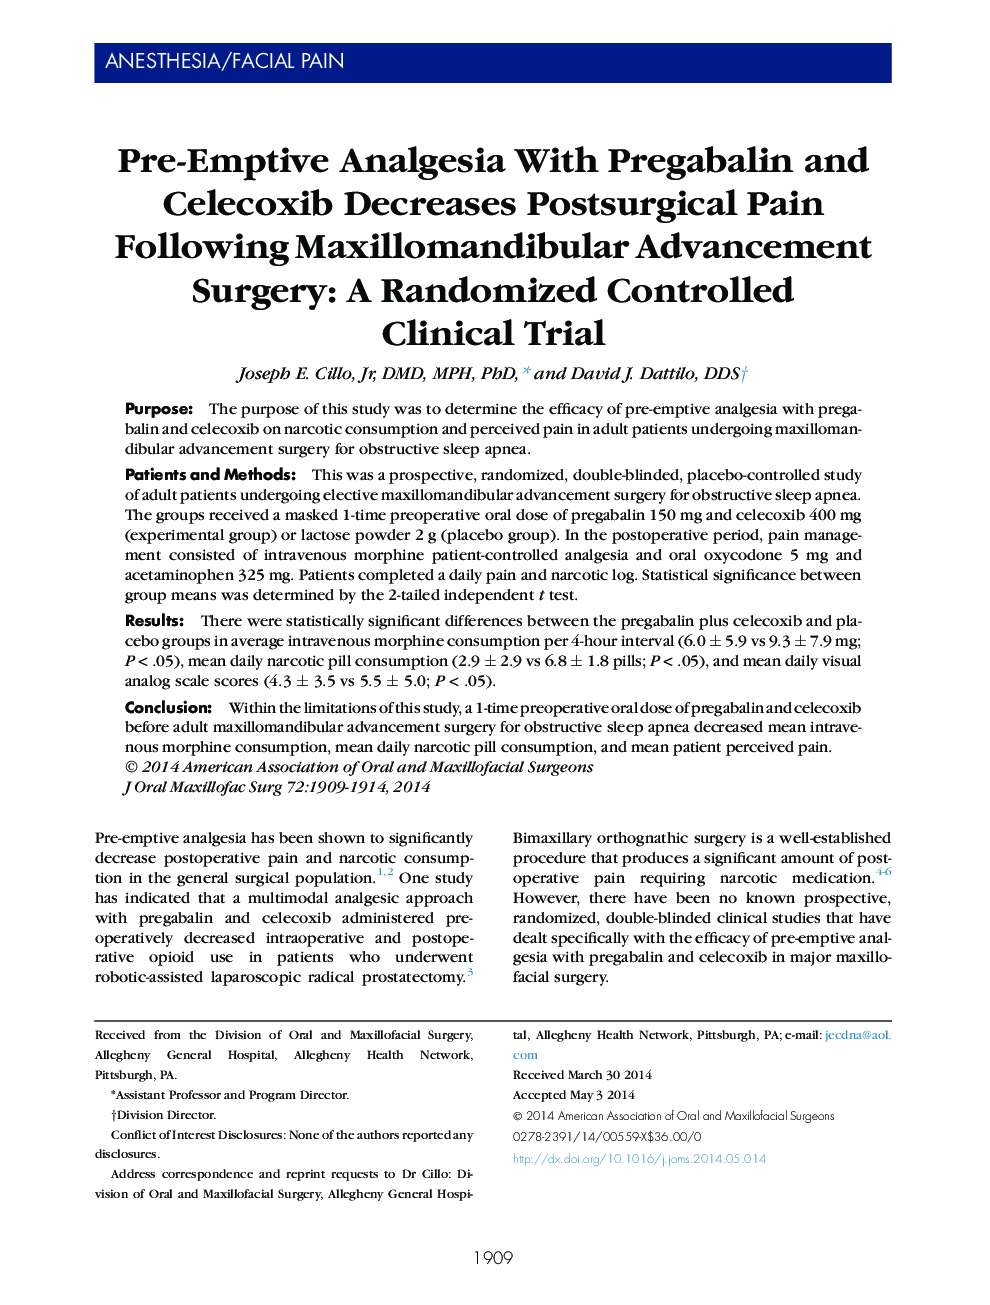 Pre-Emptive Analgesia With Pregabalin and Celecoxib Decreases Postsurgical Pain Following Maxillomandibular Advancement Surgery: A Randomized Controlled Clinical Trial 